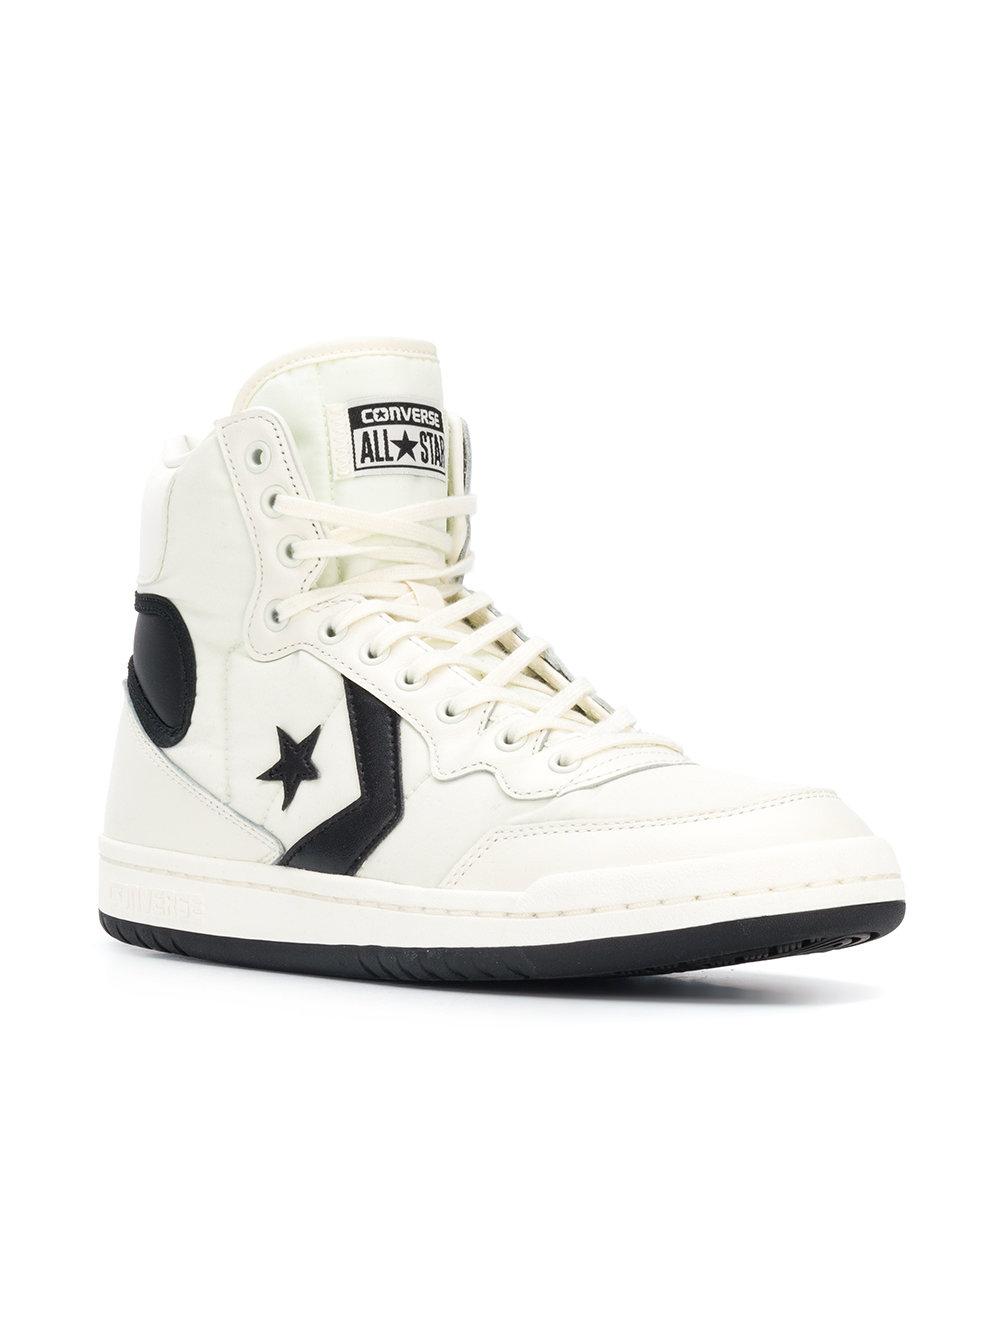 Converse Leather Fastbreak Vintage Sport Hi-top Sneakers in White for Men -  Lyst